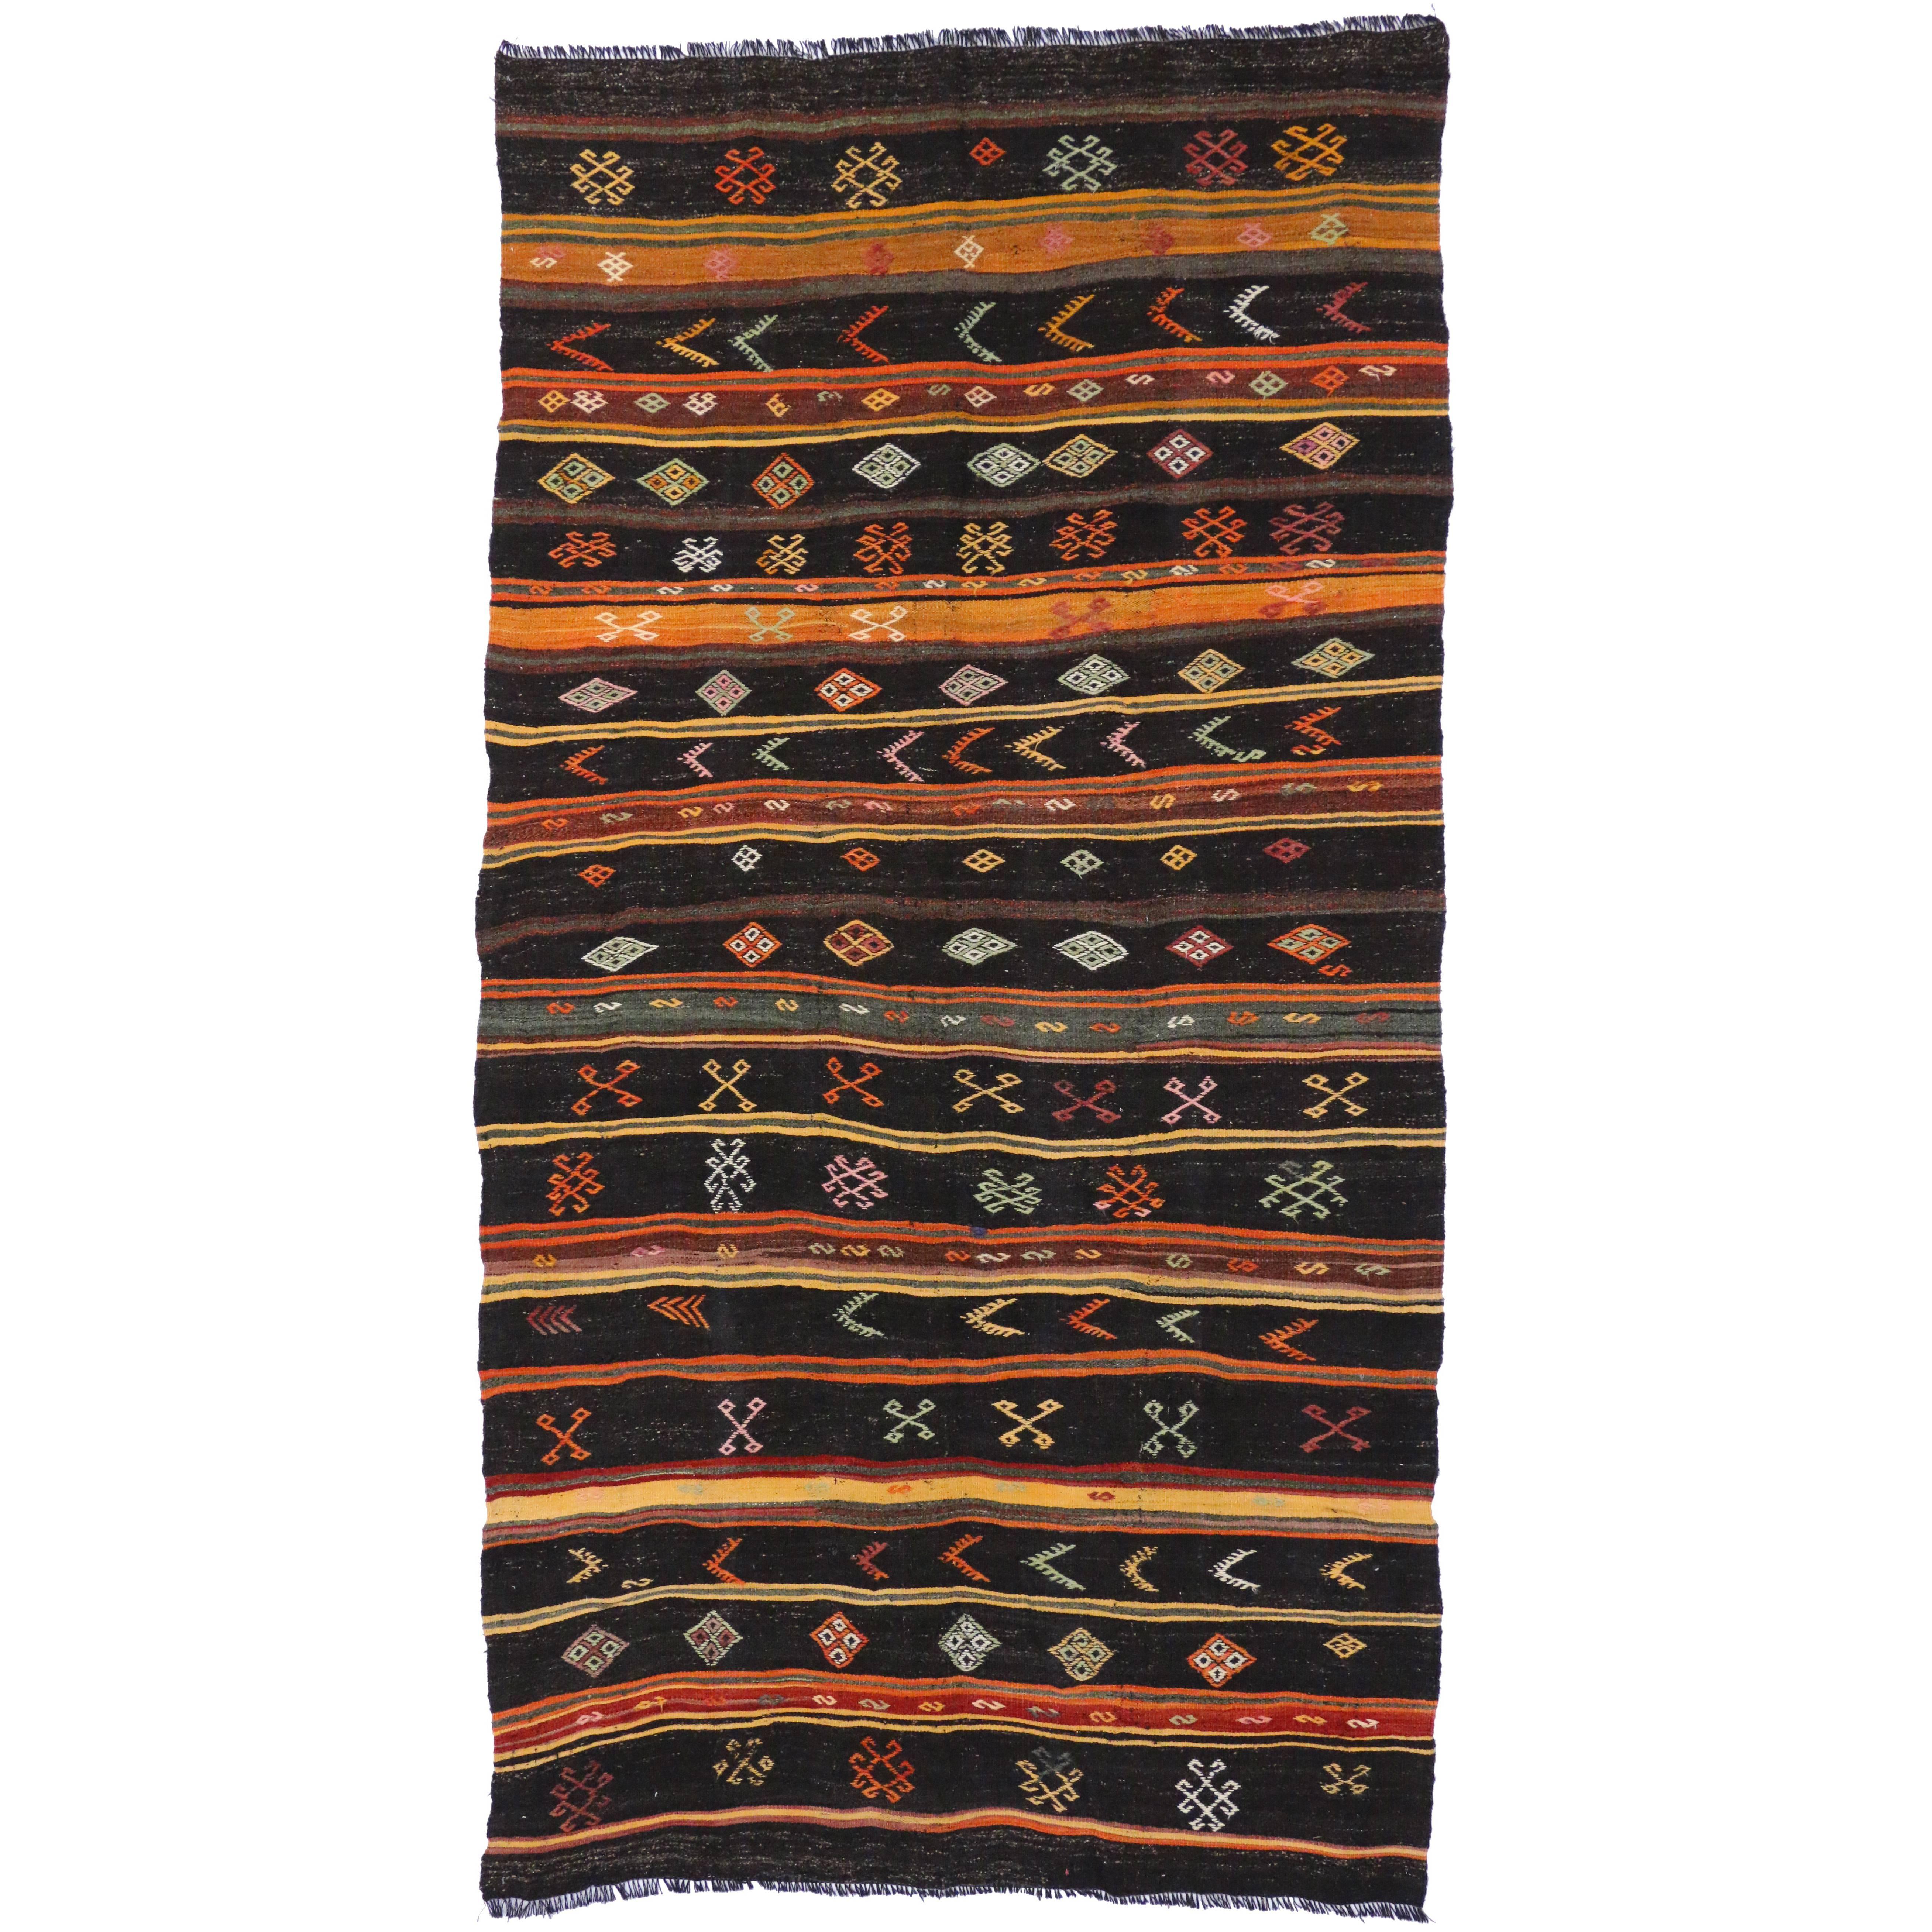 Vintage Turkish Kilim Rug with Modern Tribal Design, Flatweave Kilim Rug.